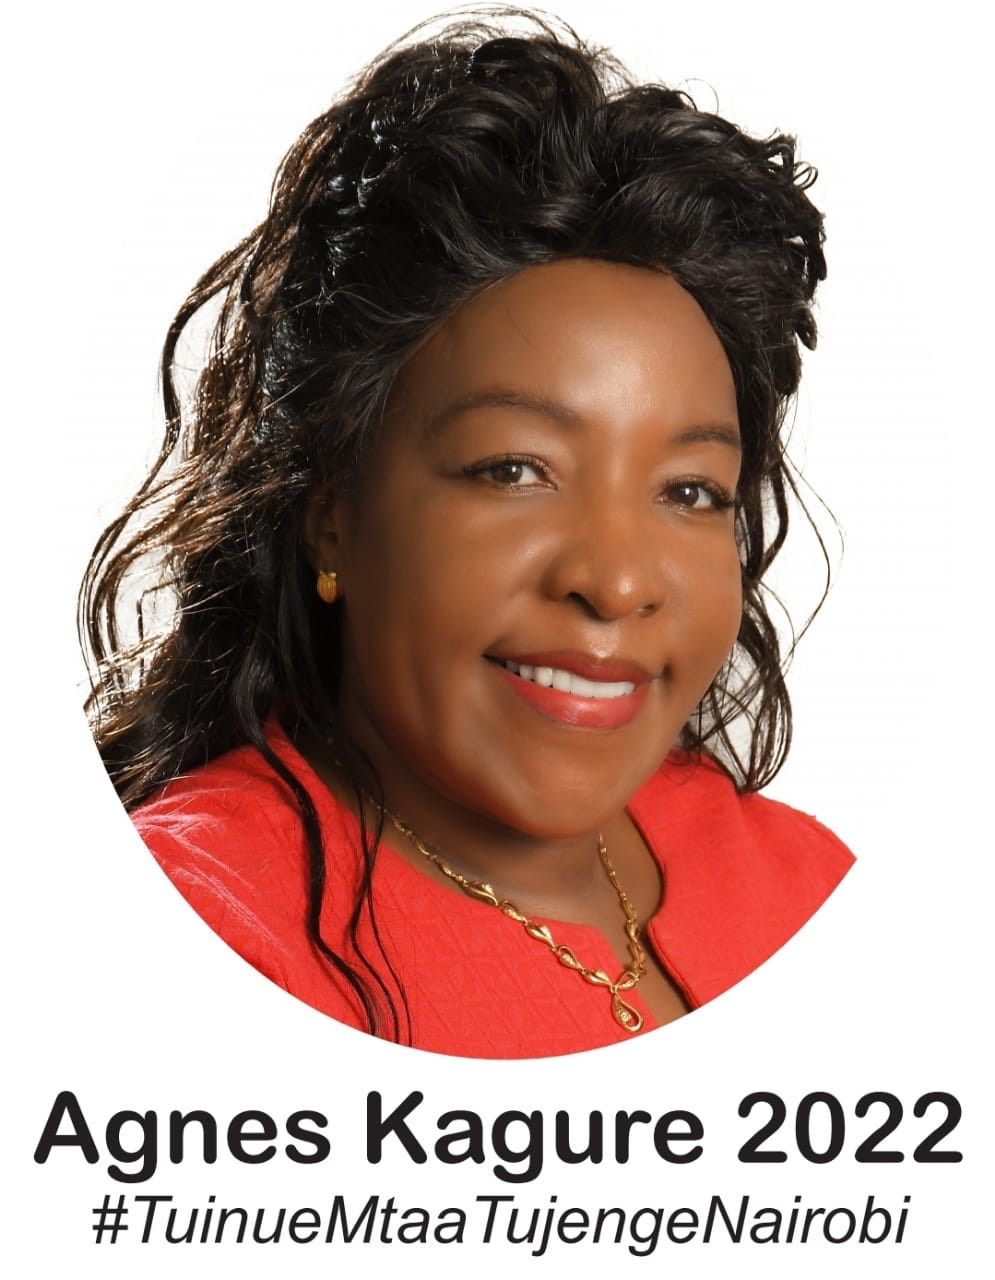 Most popular Nairobi Governor 2022